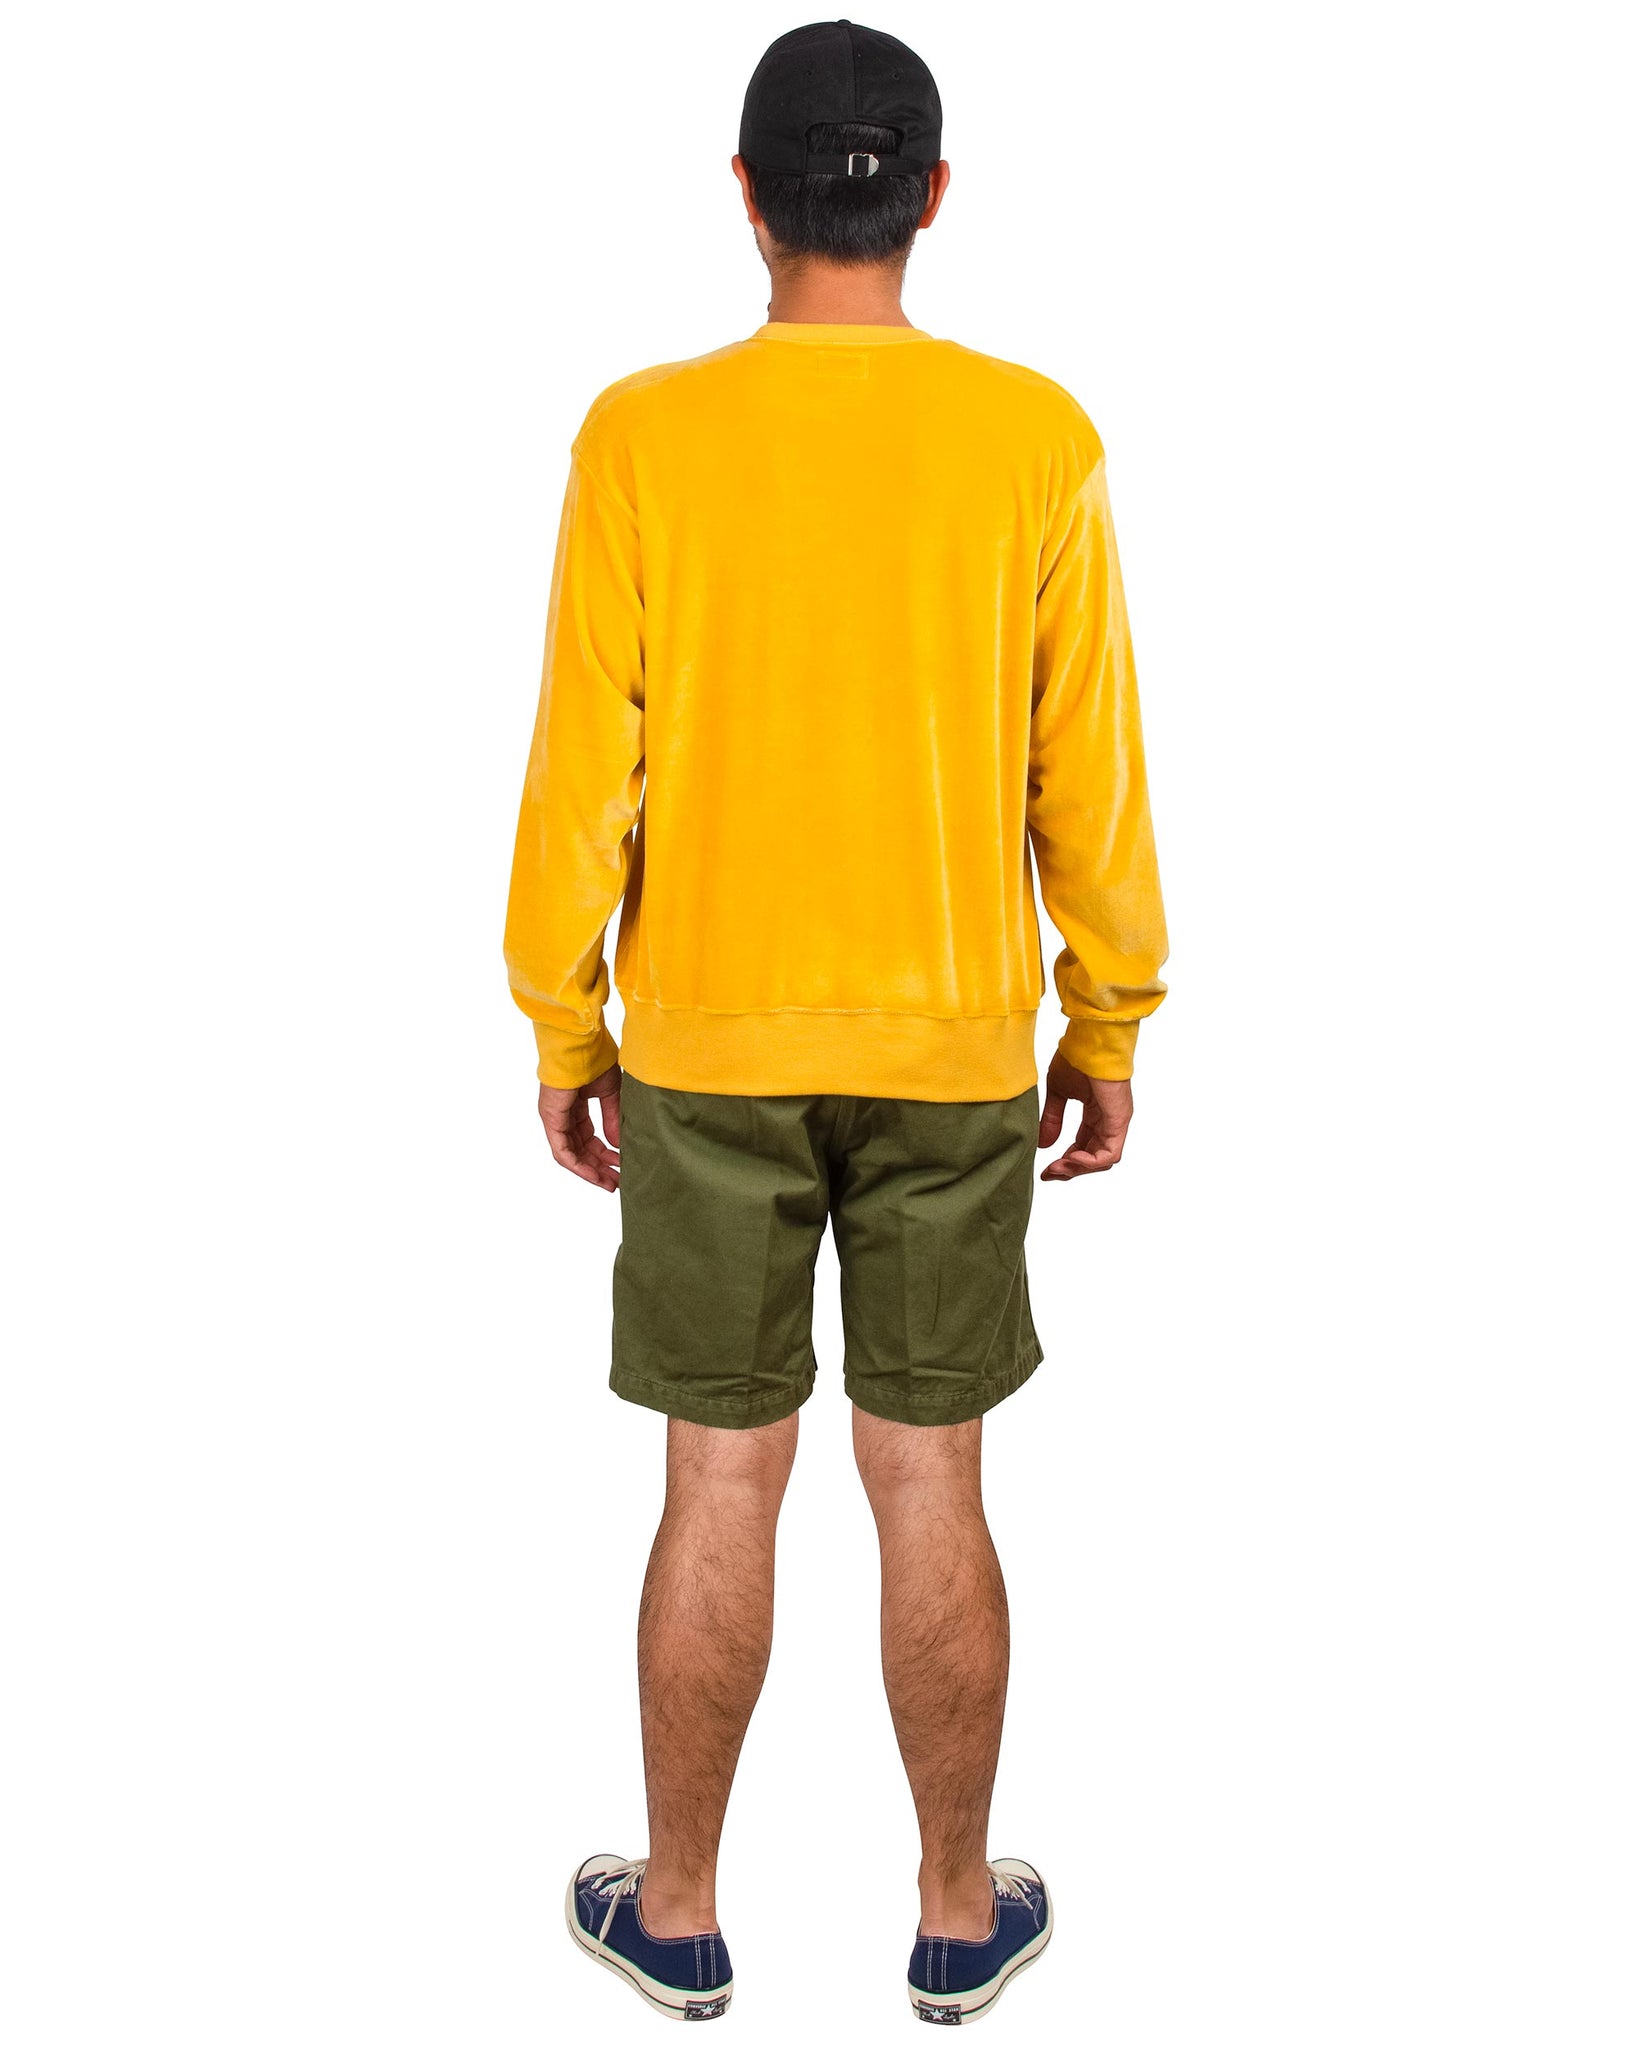 The Real McCoy's MC22002 Cotton Rayon Pile Sweatshirt Yellow Back